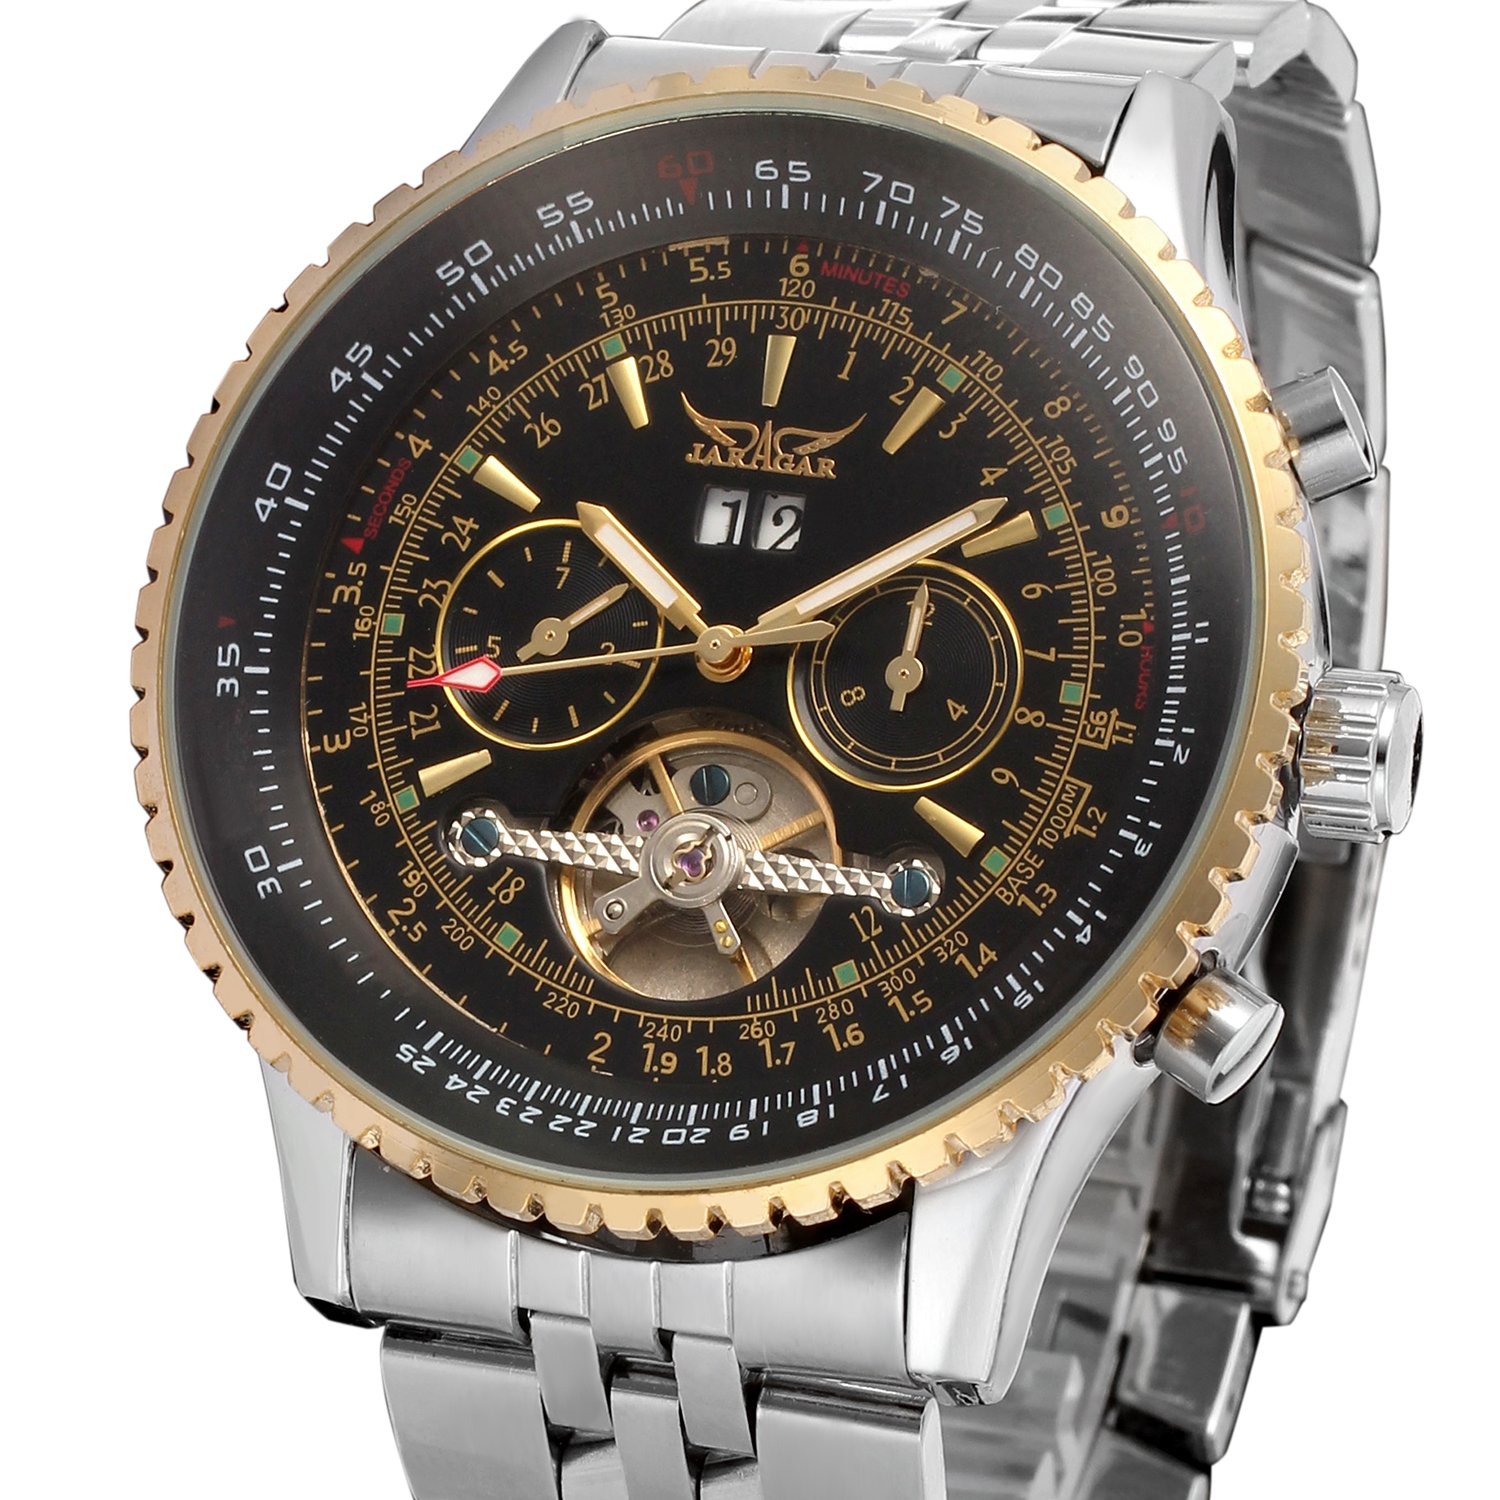 FORSINING Men's Automatic Tourbillon Complete Calendar Wrist Watch JAG034M4